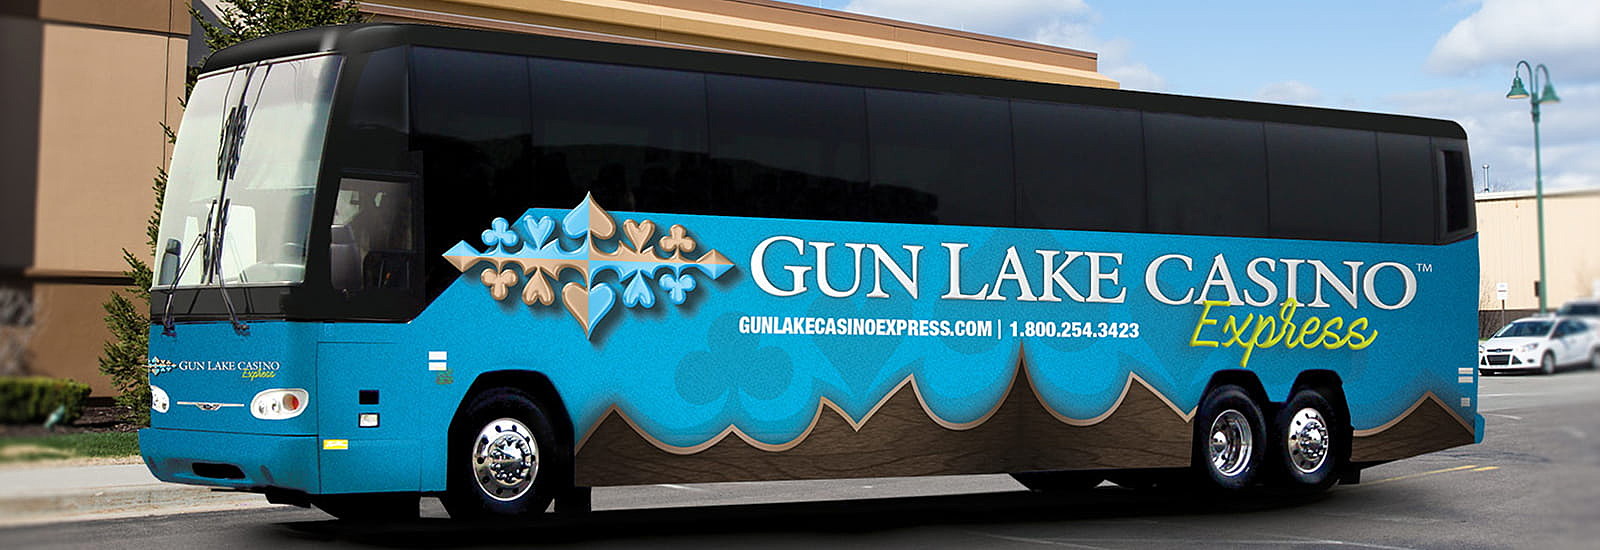 closest hotel to gun lake casino